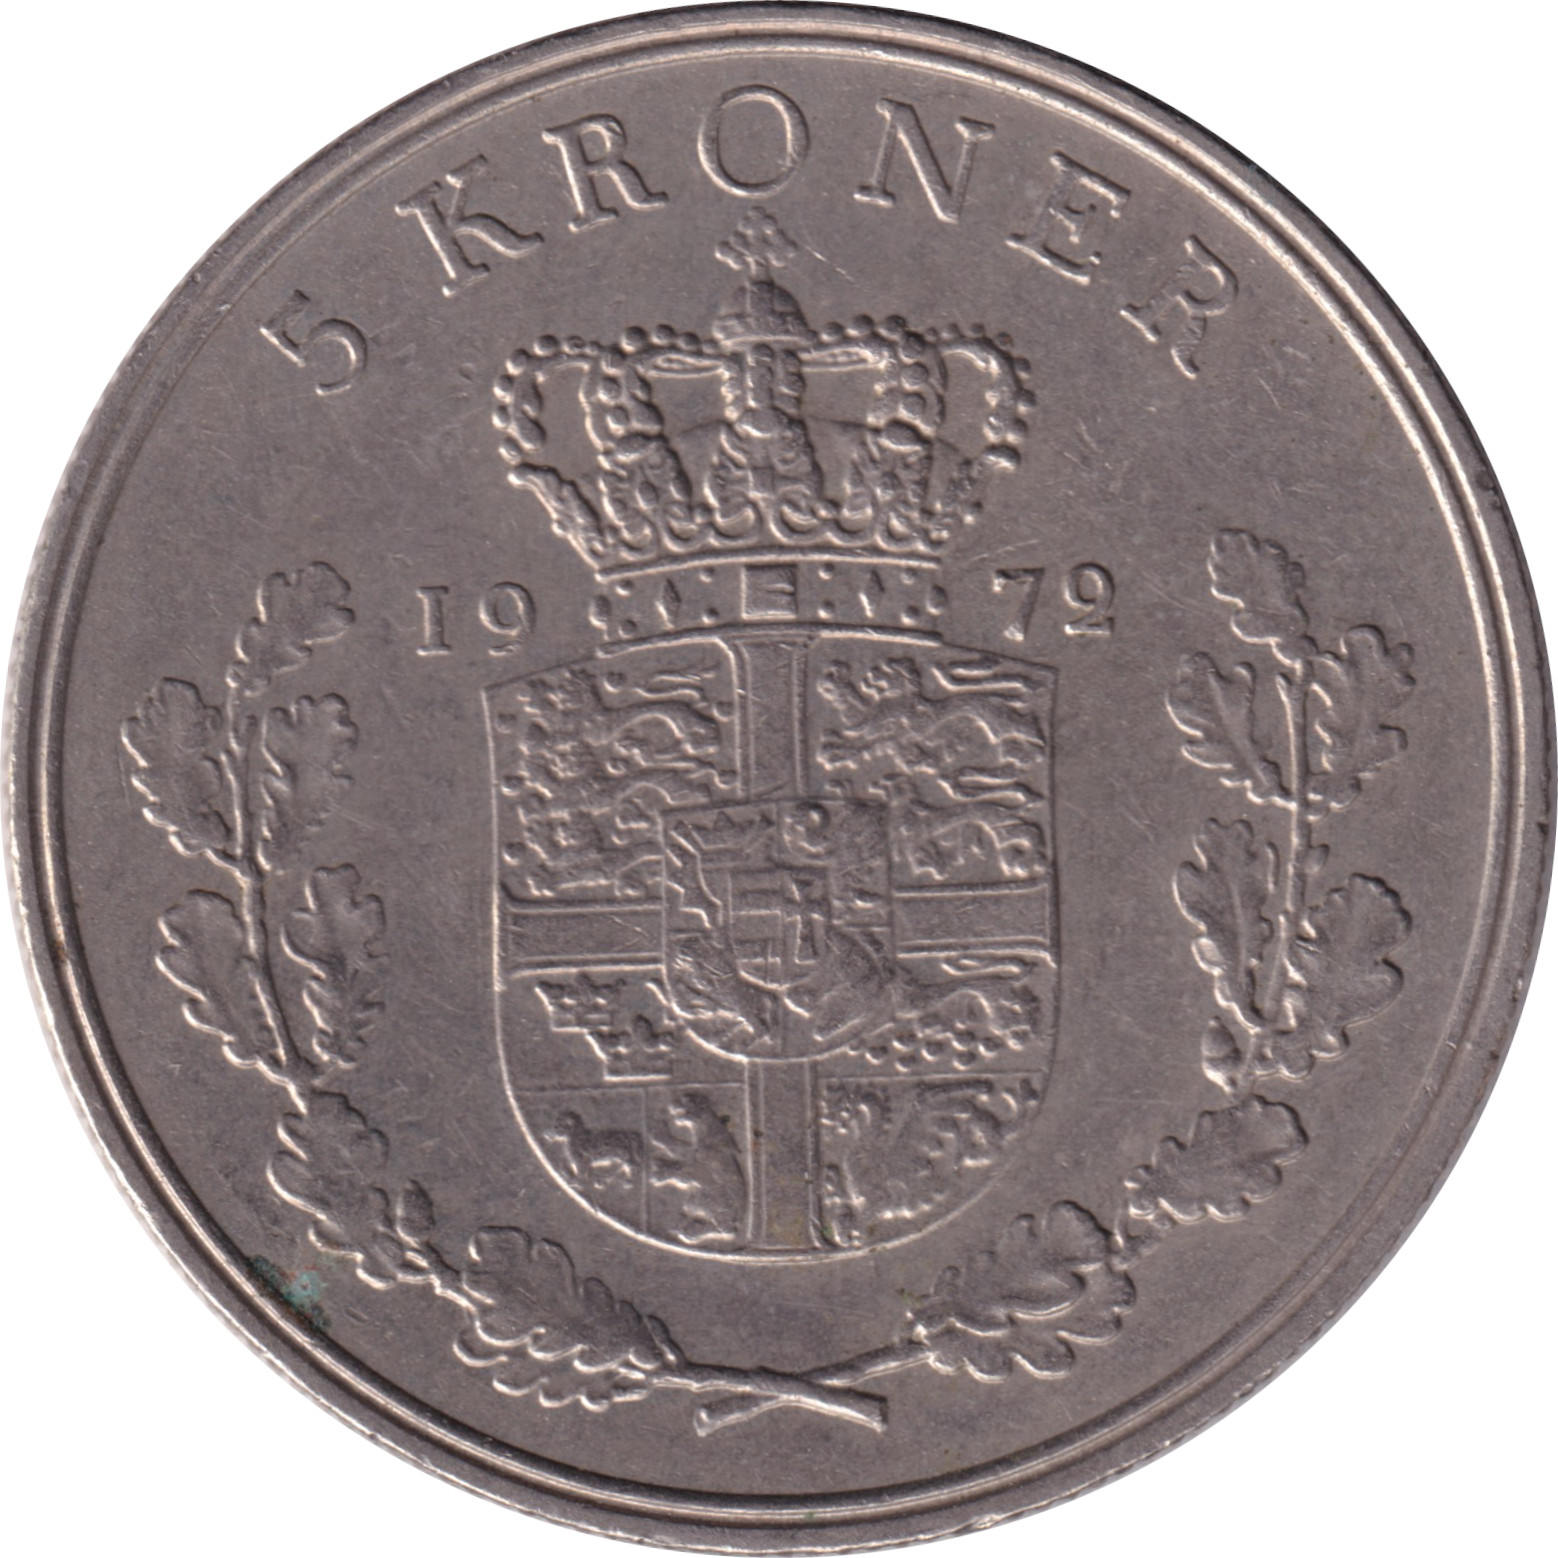 5 kroner - Frédéric IX